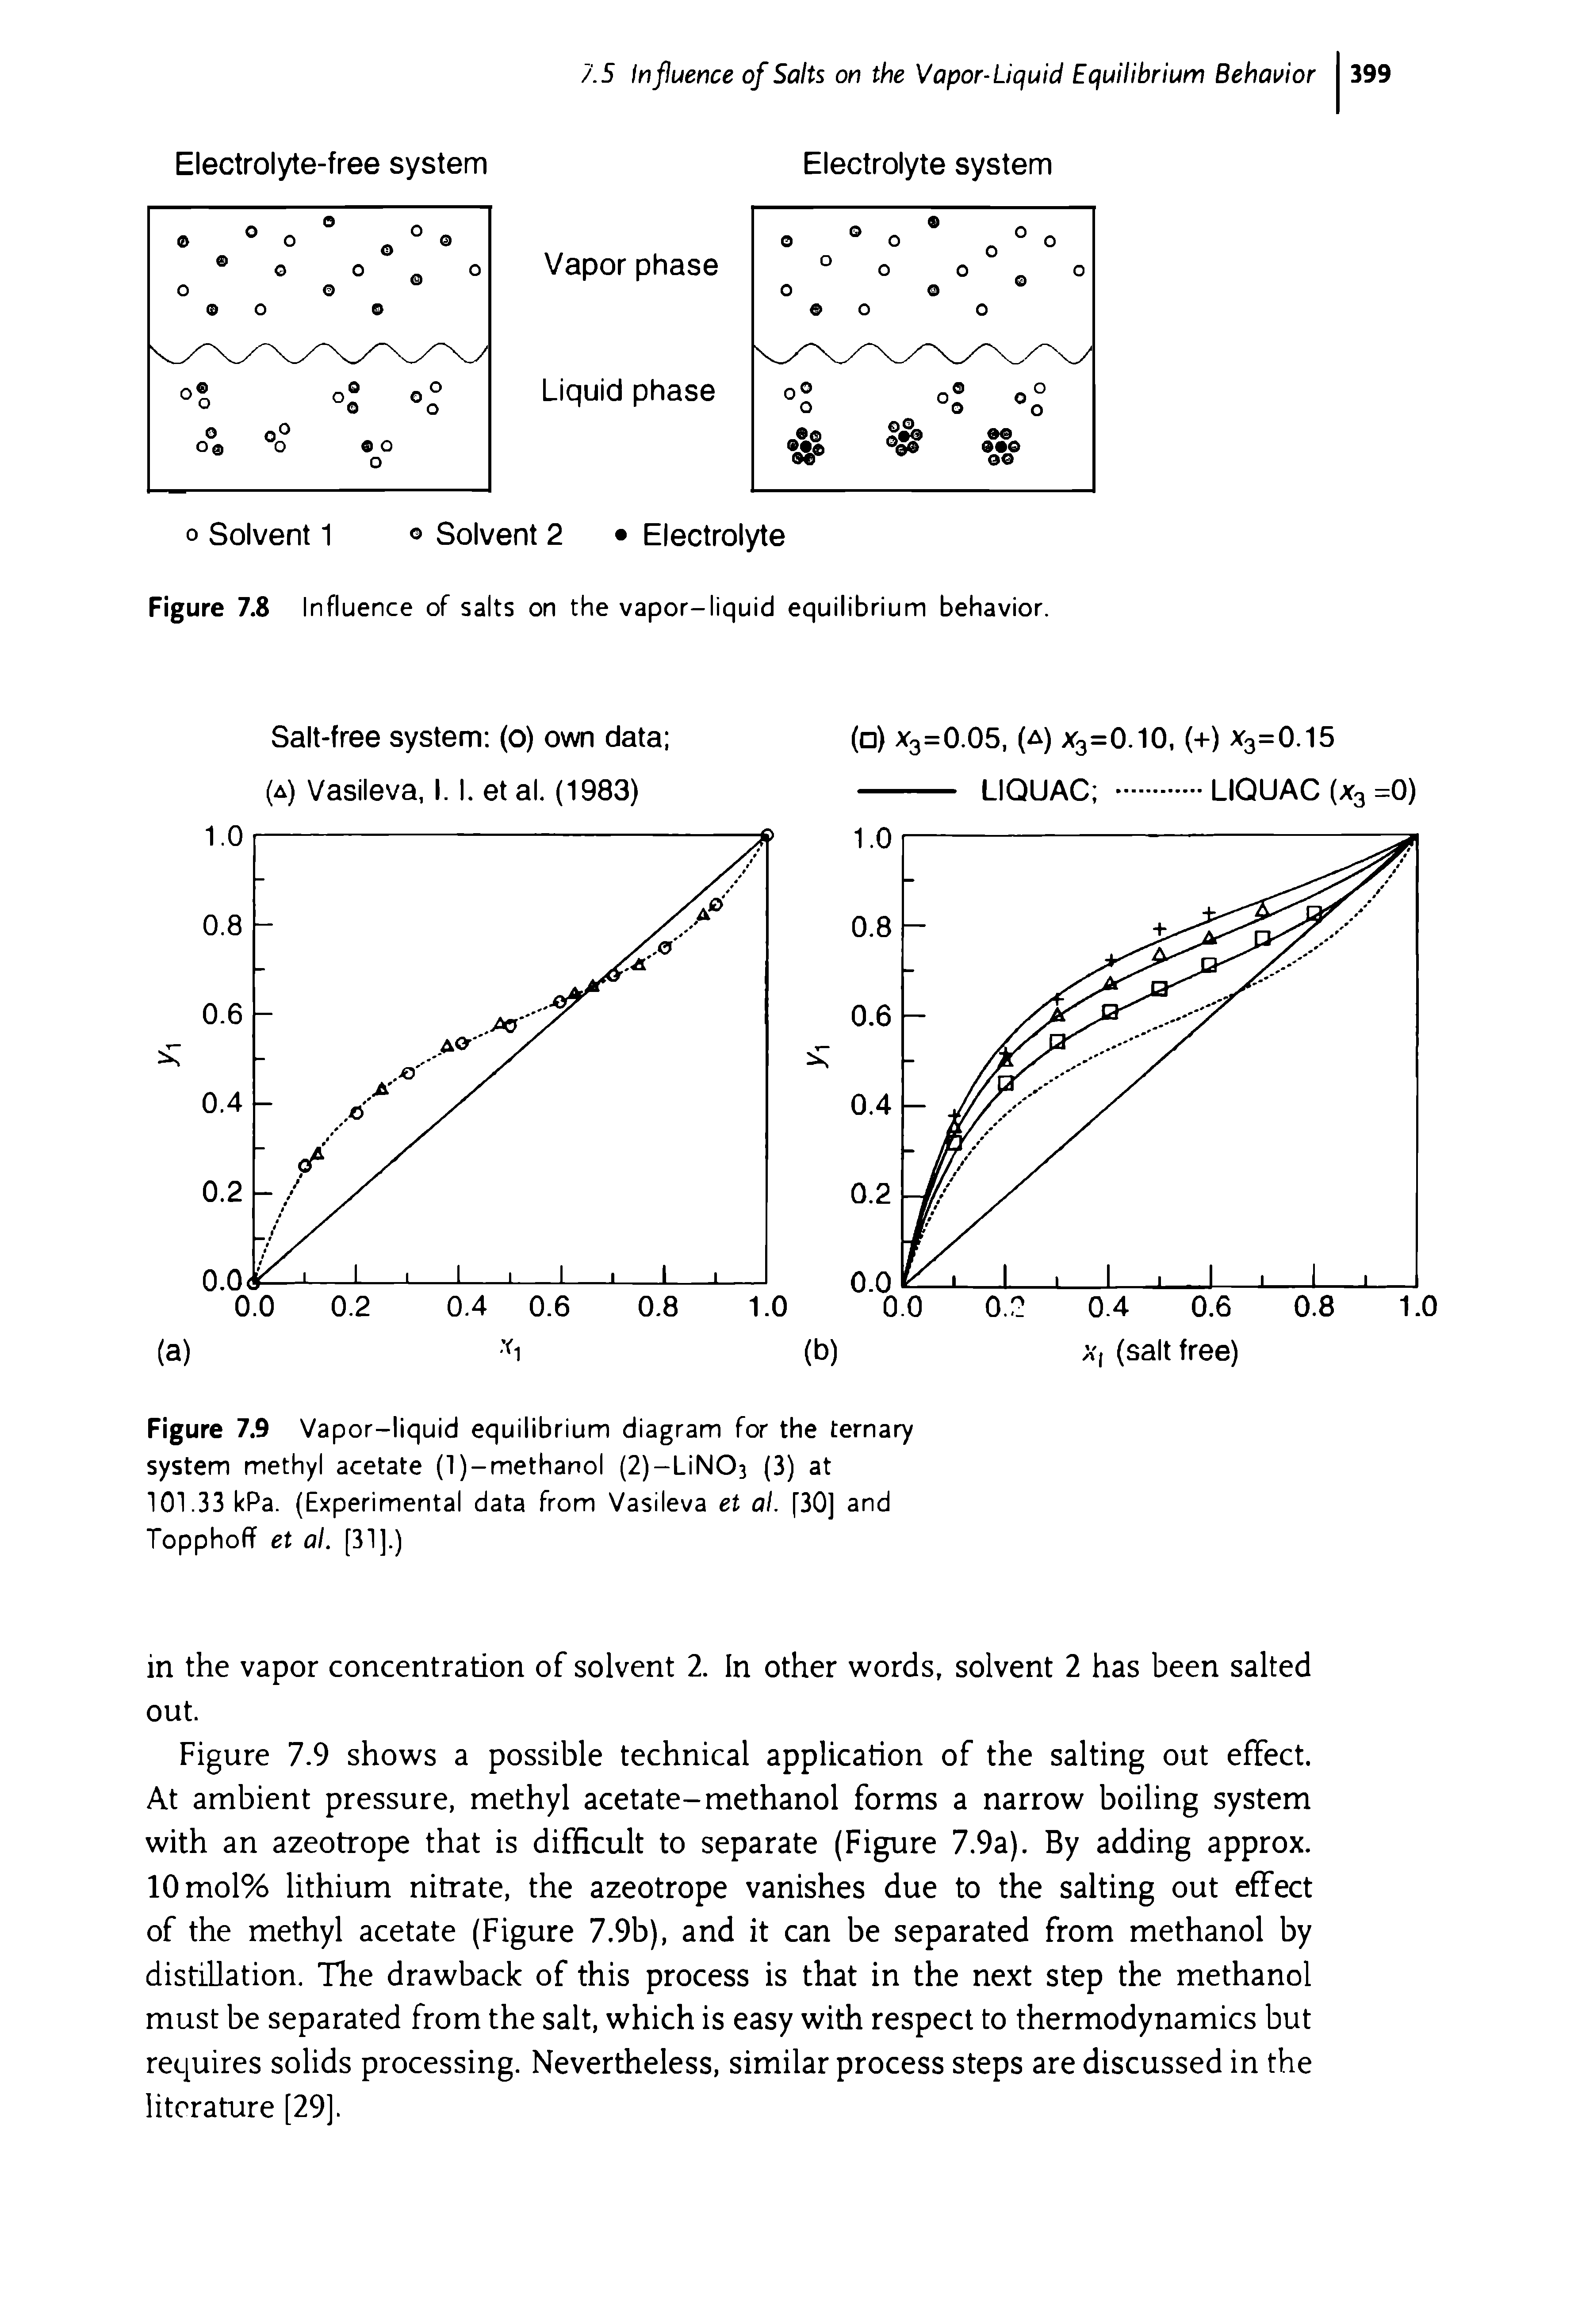 Figure 7.9 Vapor-liquid equilibrium diagram for the ternary system methyl acetate (l)-methanol (2)-LiN03 (3) at 101.33 kPa. (Experimental data from Vasileva et al. [30] and Topphoff et al. [31].)...